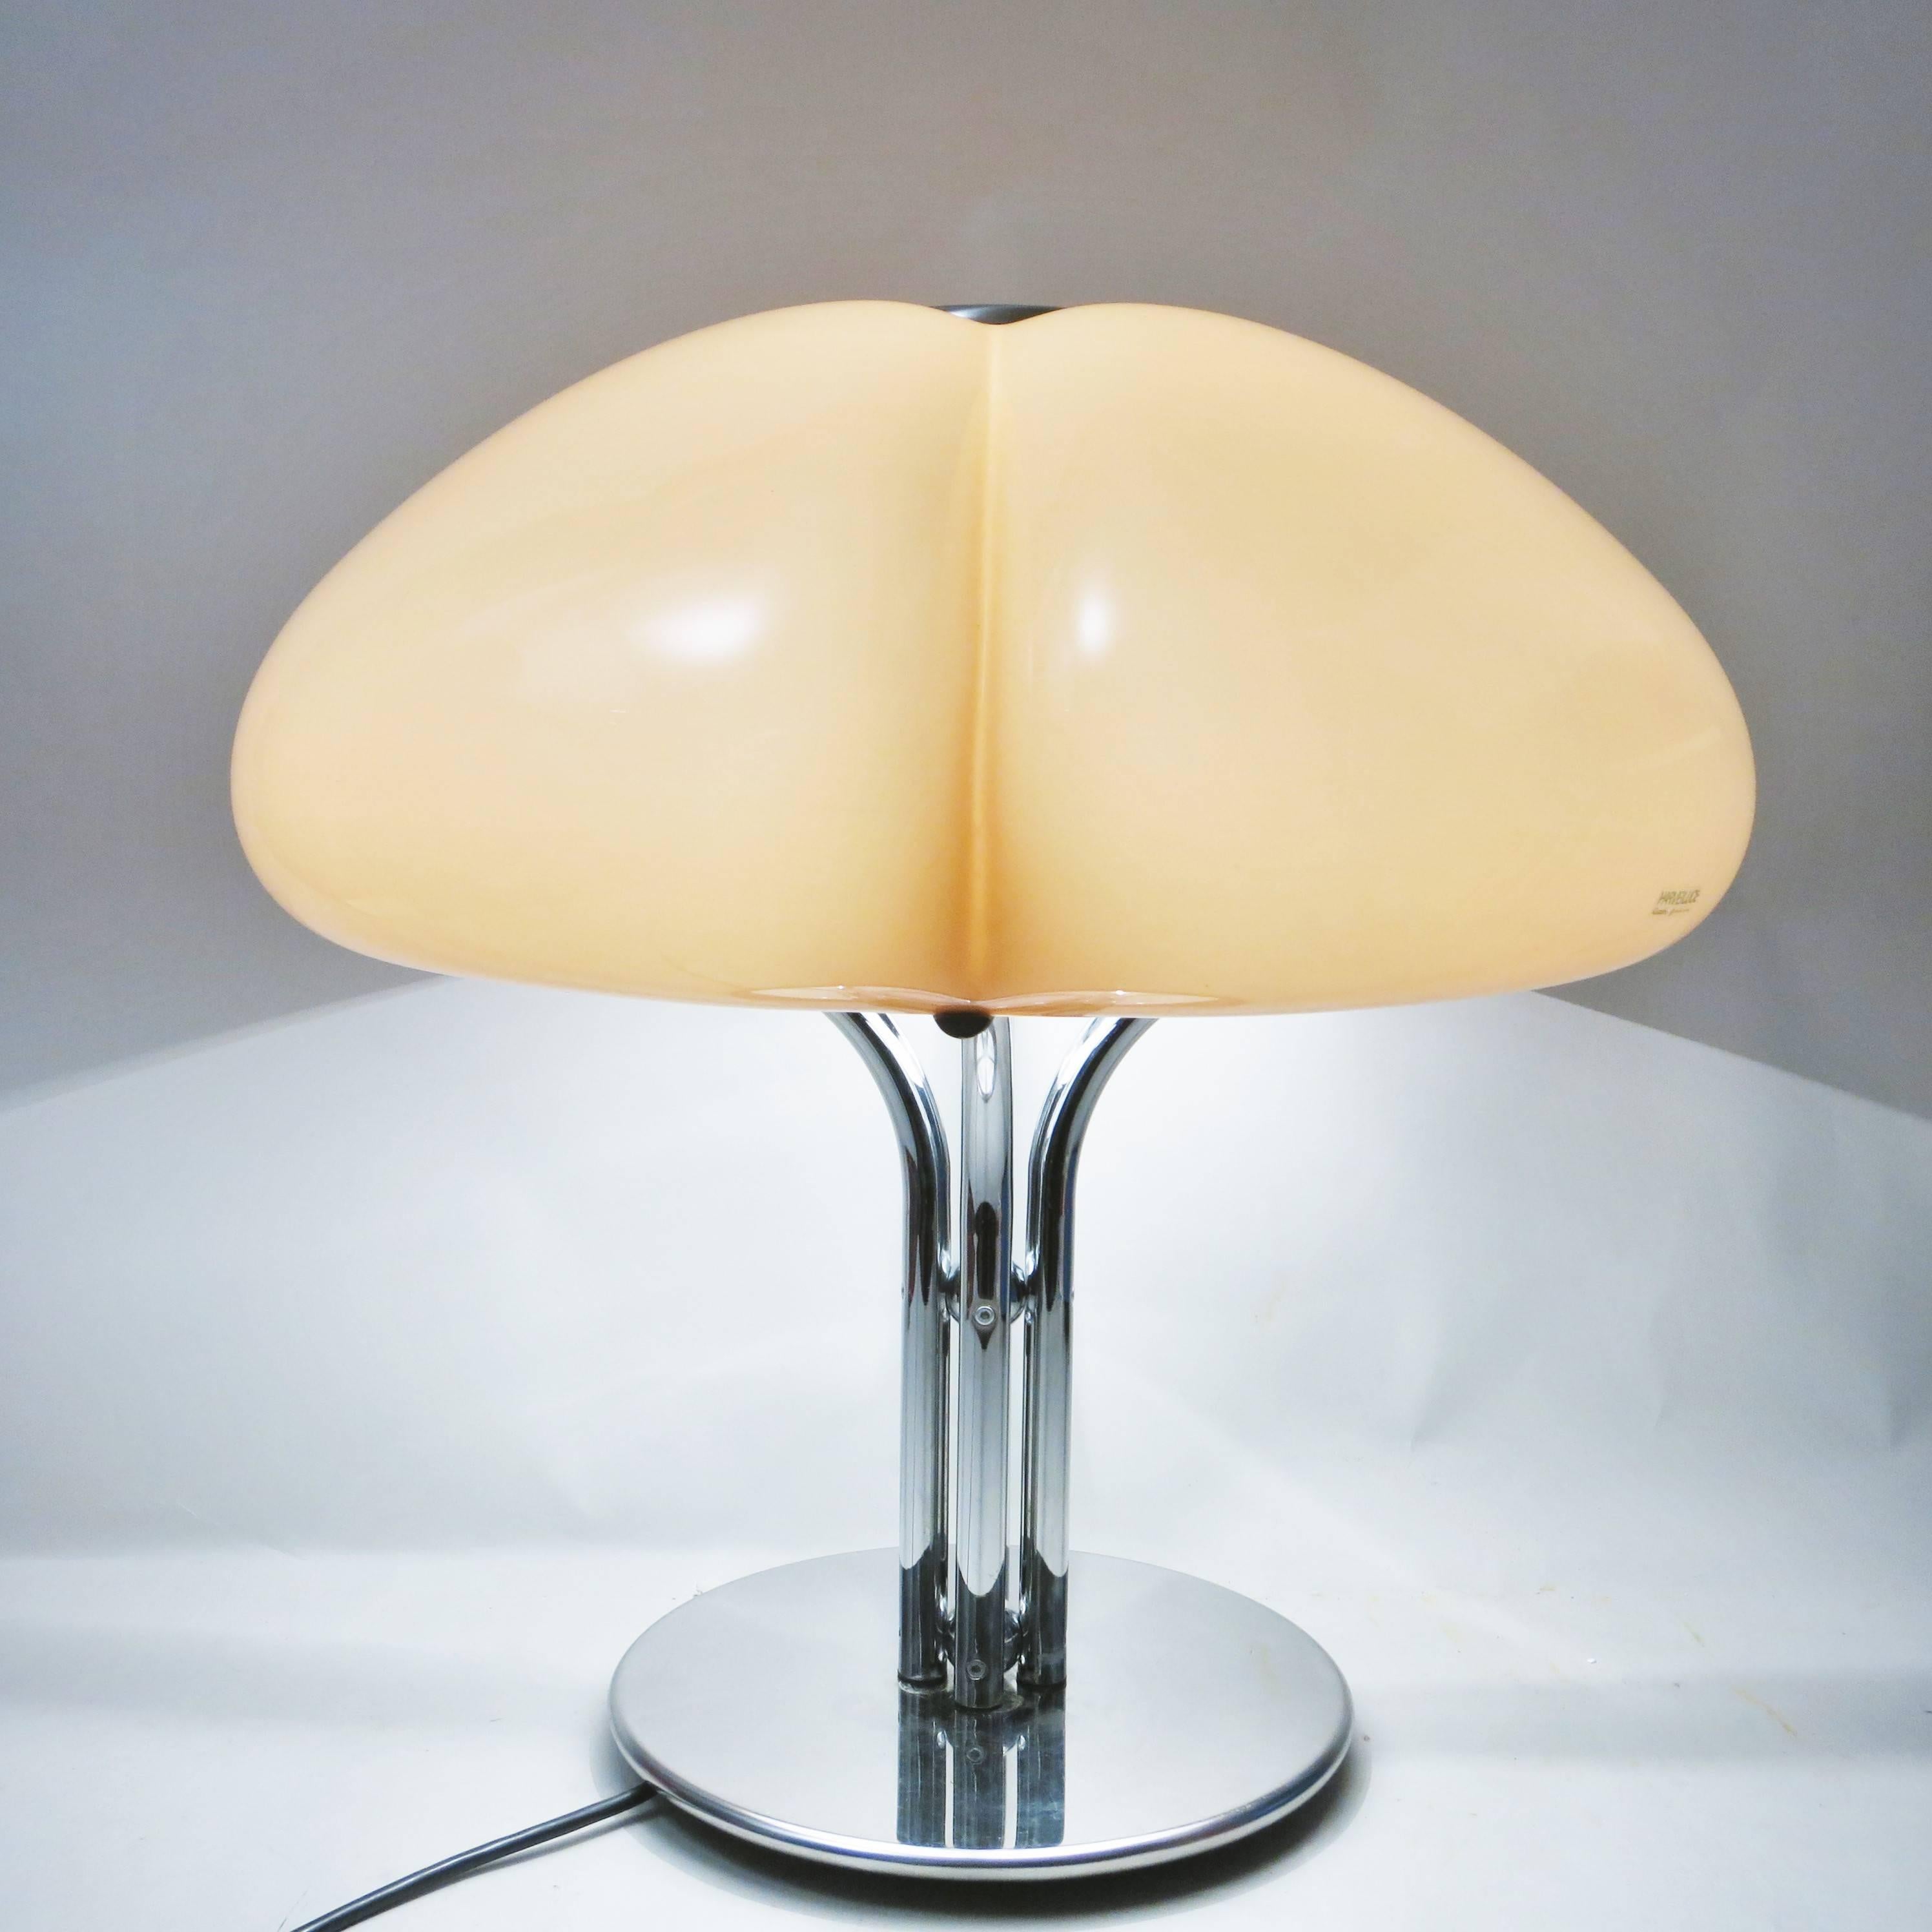 Rare lamp Quadrifoglio designed by Gae Aulenti and produced by Harvey Guzzini, circa 1975
Beautiful acrylic shade nude color.